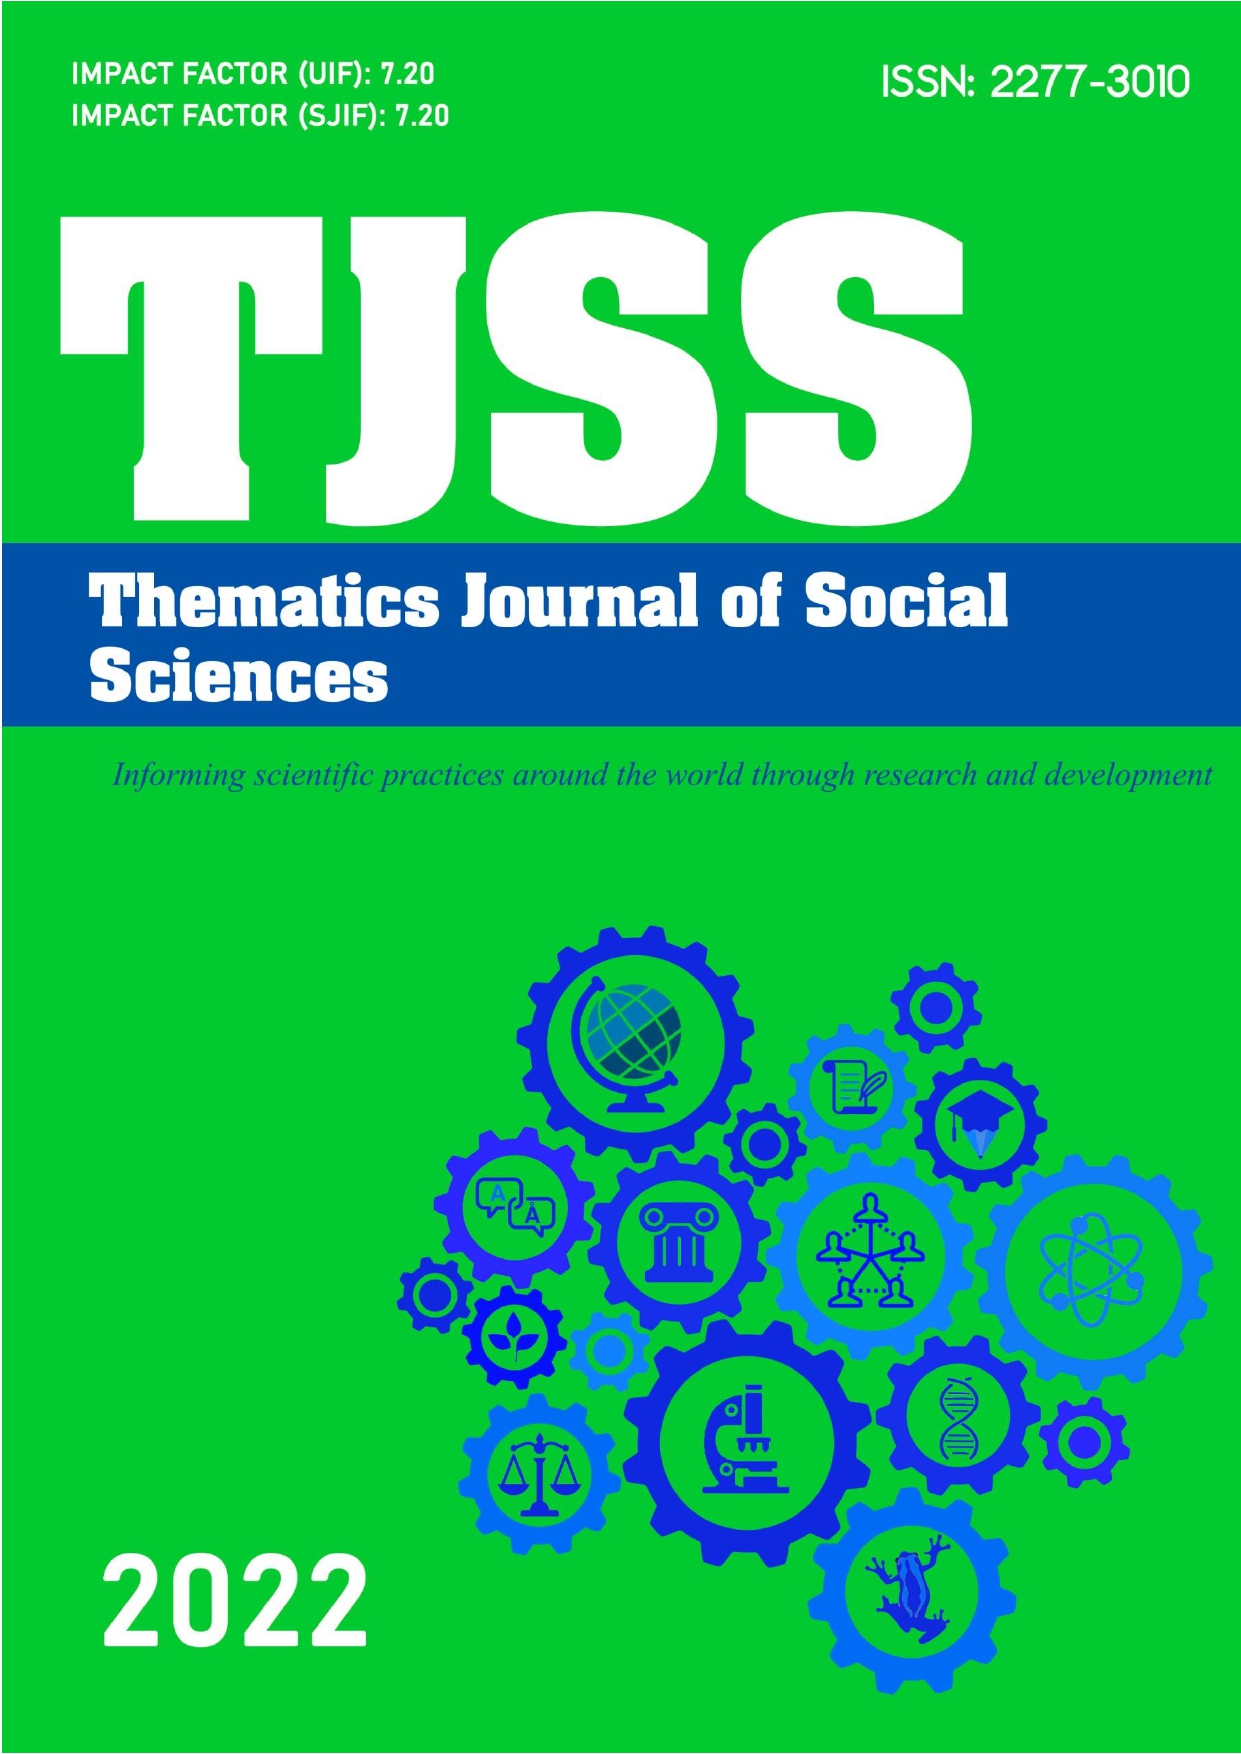 					View Vol. 8 No. 3 (2022): THEMATICS JOURNAL OF SOCIAL SCIENCES
				